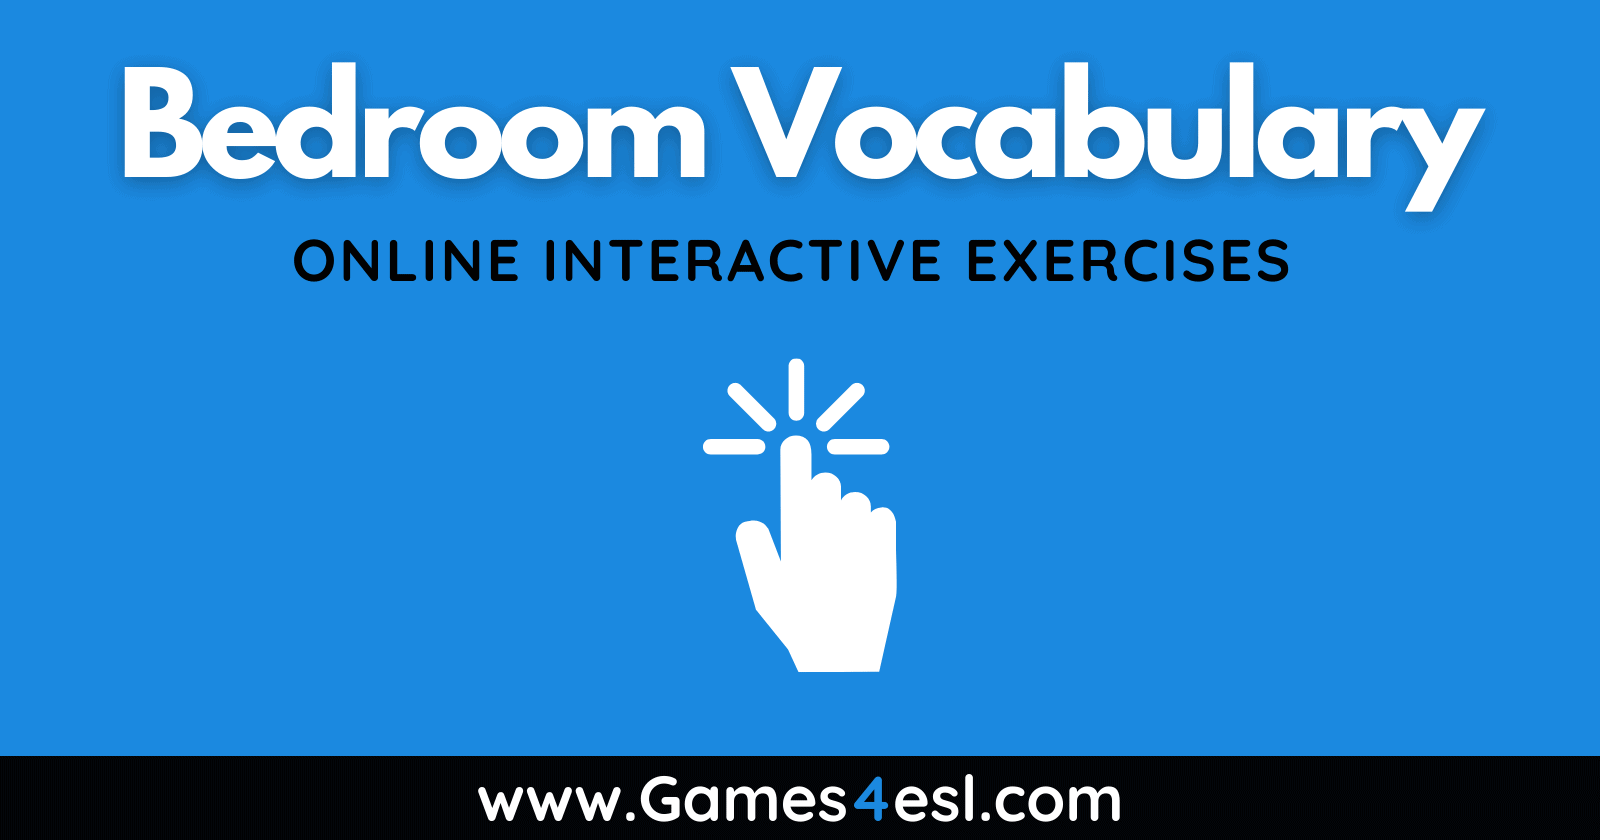 Bedroom - Vocabulary Exercises